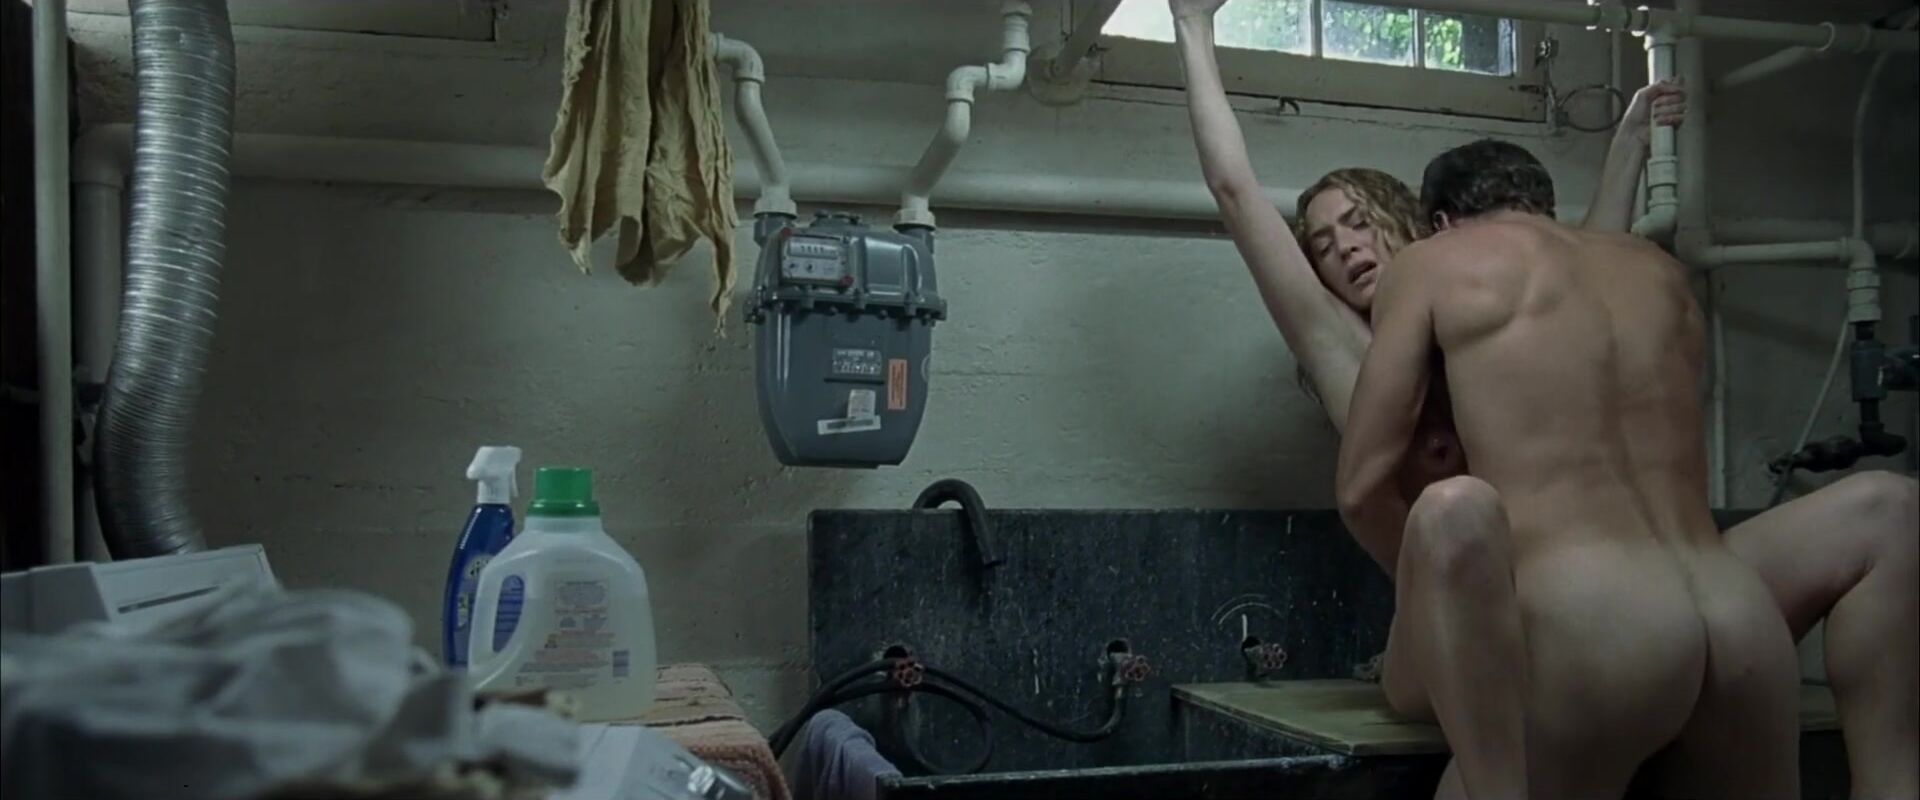 Assfingering Little C celebrity Kate Winslet is fucked by Patrick Wilson in their cabin (2006) WeLoveTube